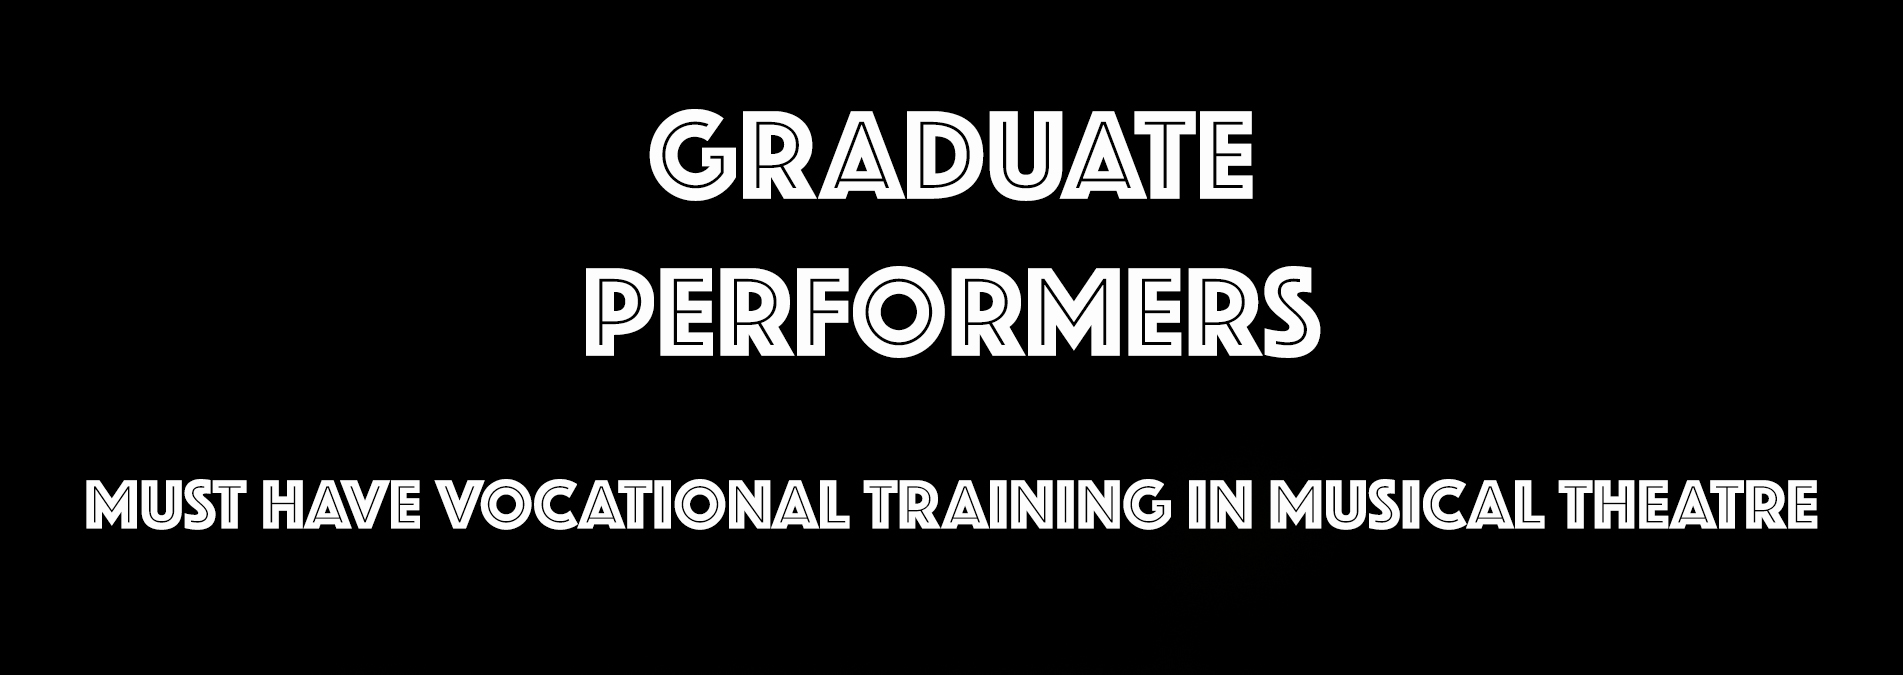 Graduate Performers